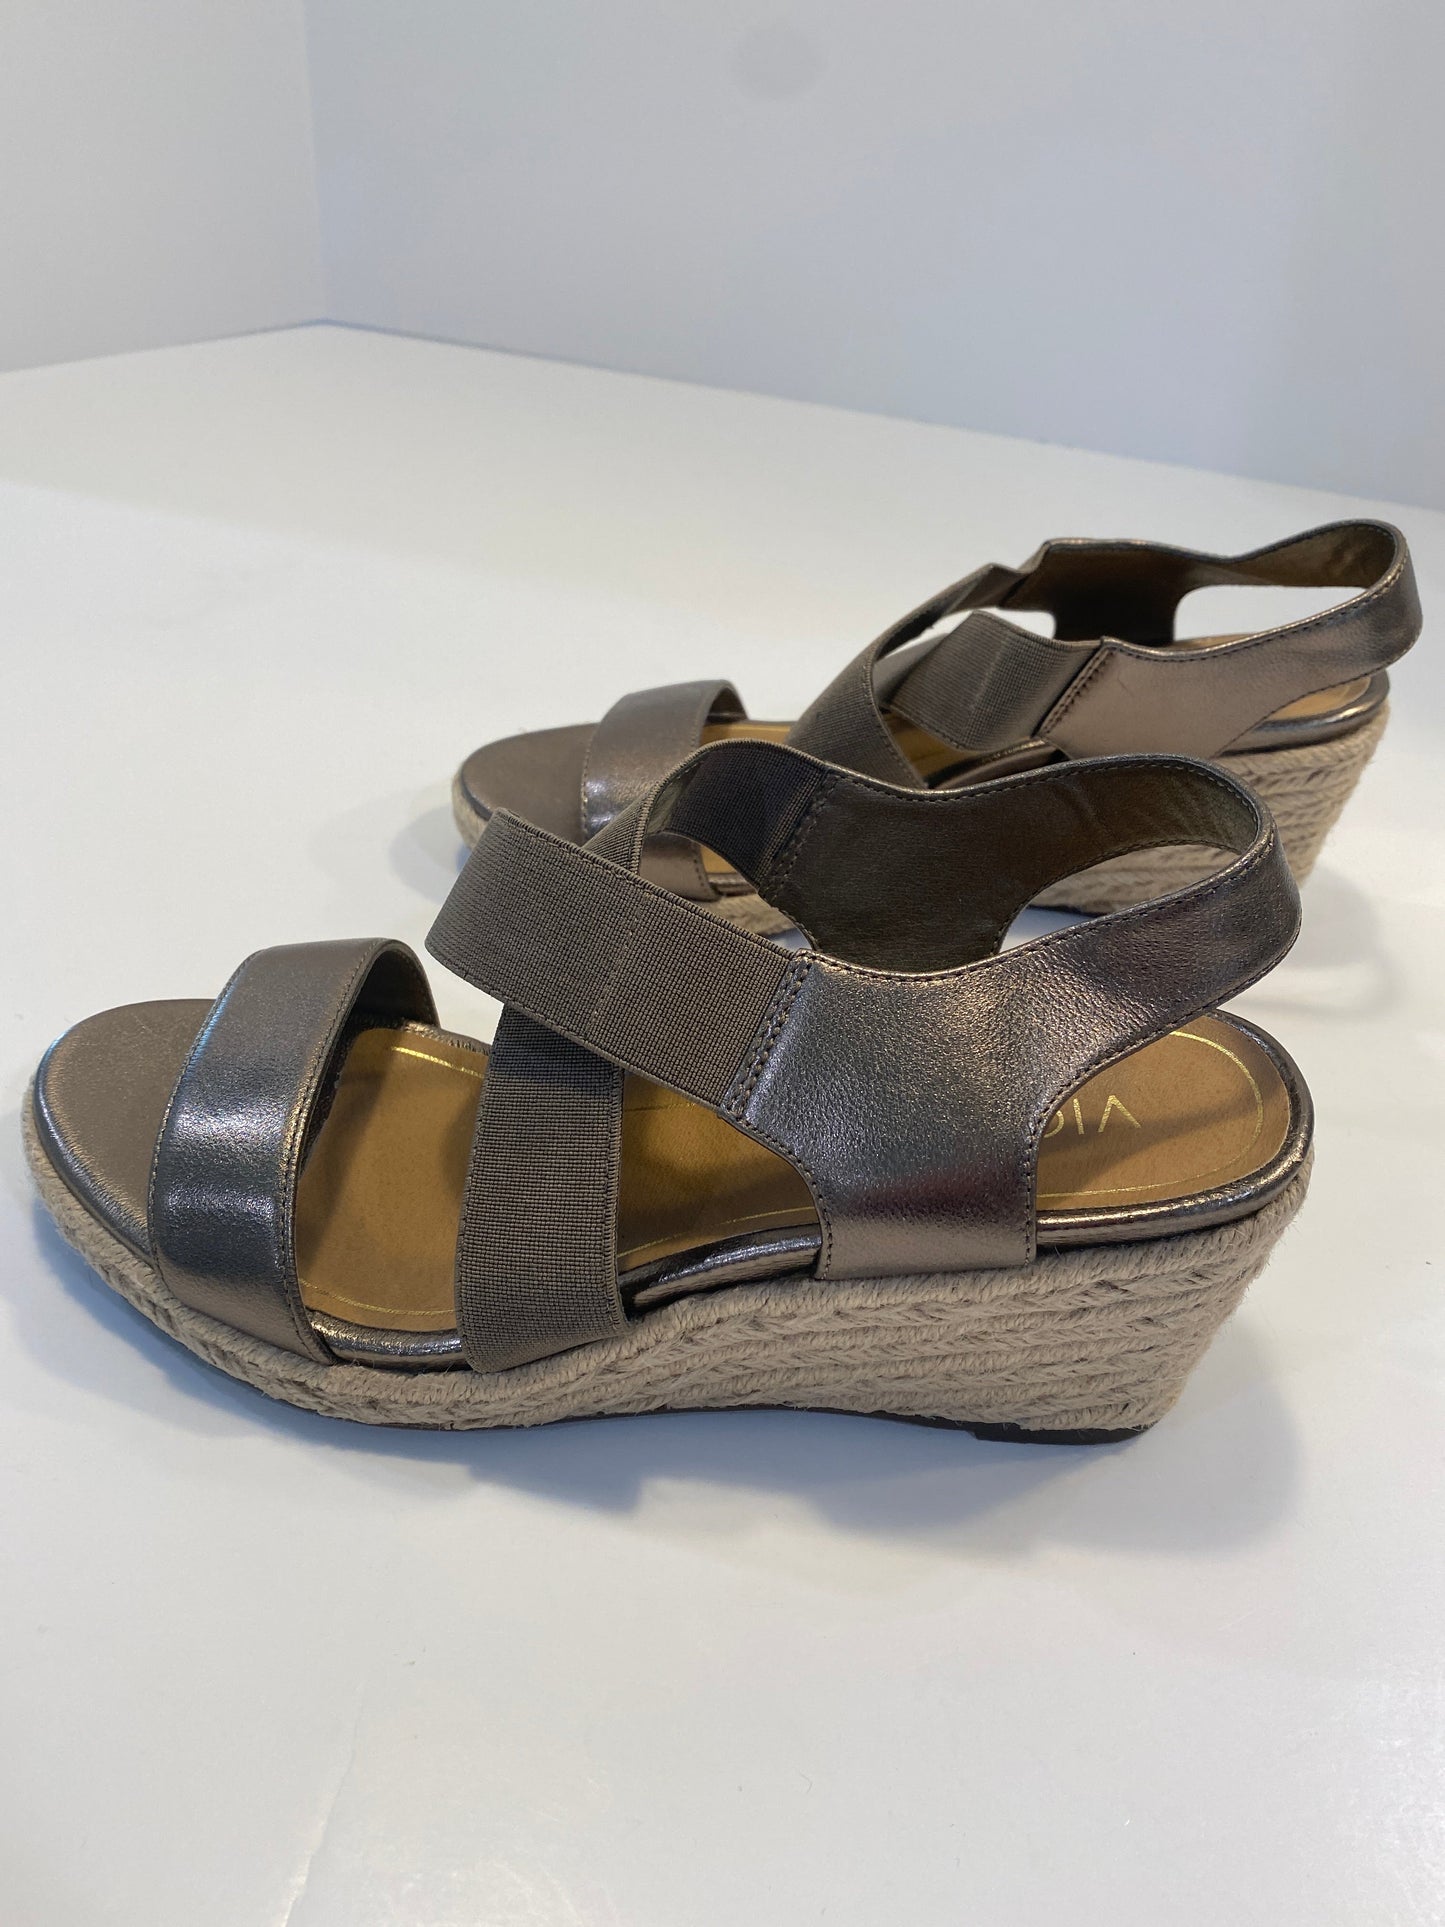 Taupe Sandals Heels Block Vionic, Size 8